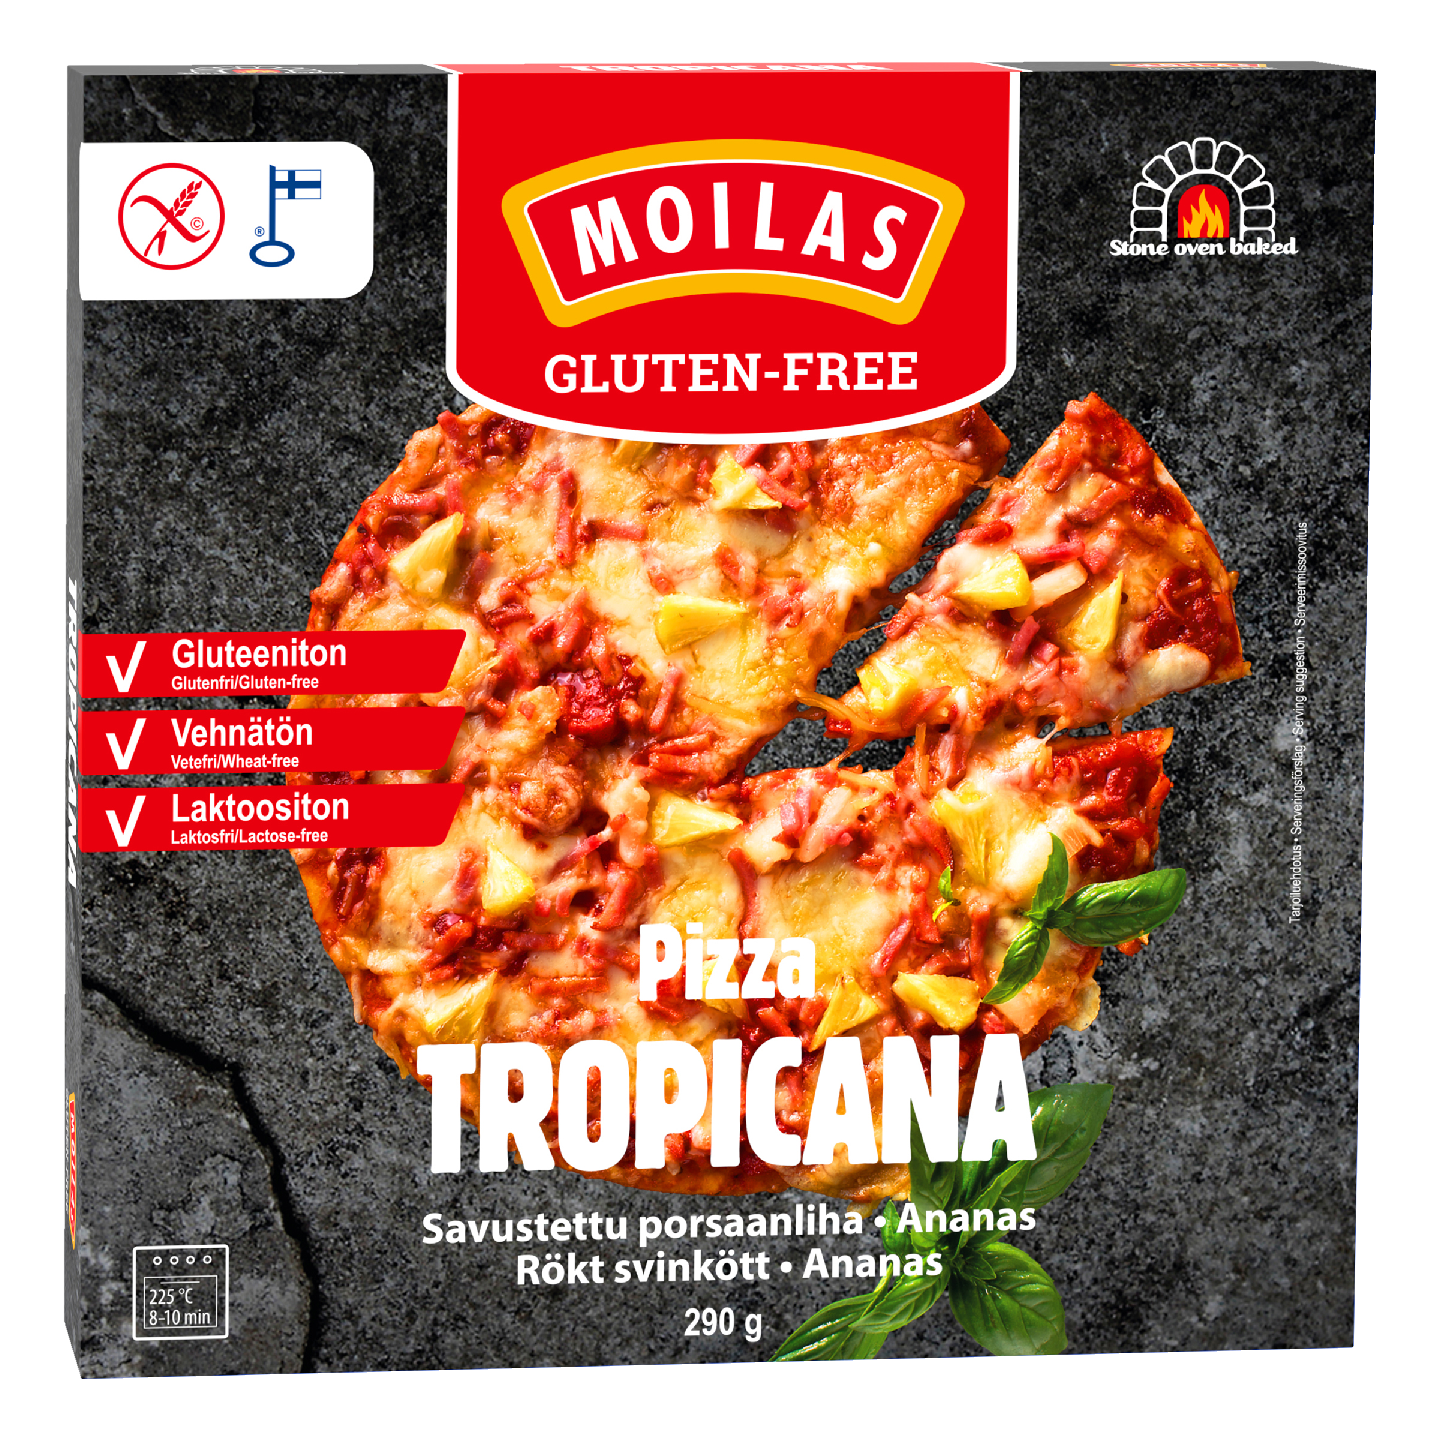 Moilas pizza tropicana 290g gluteeniton pakaste